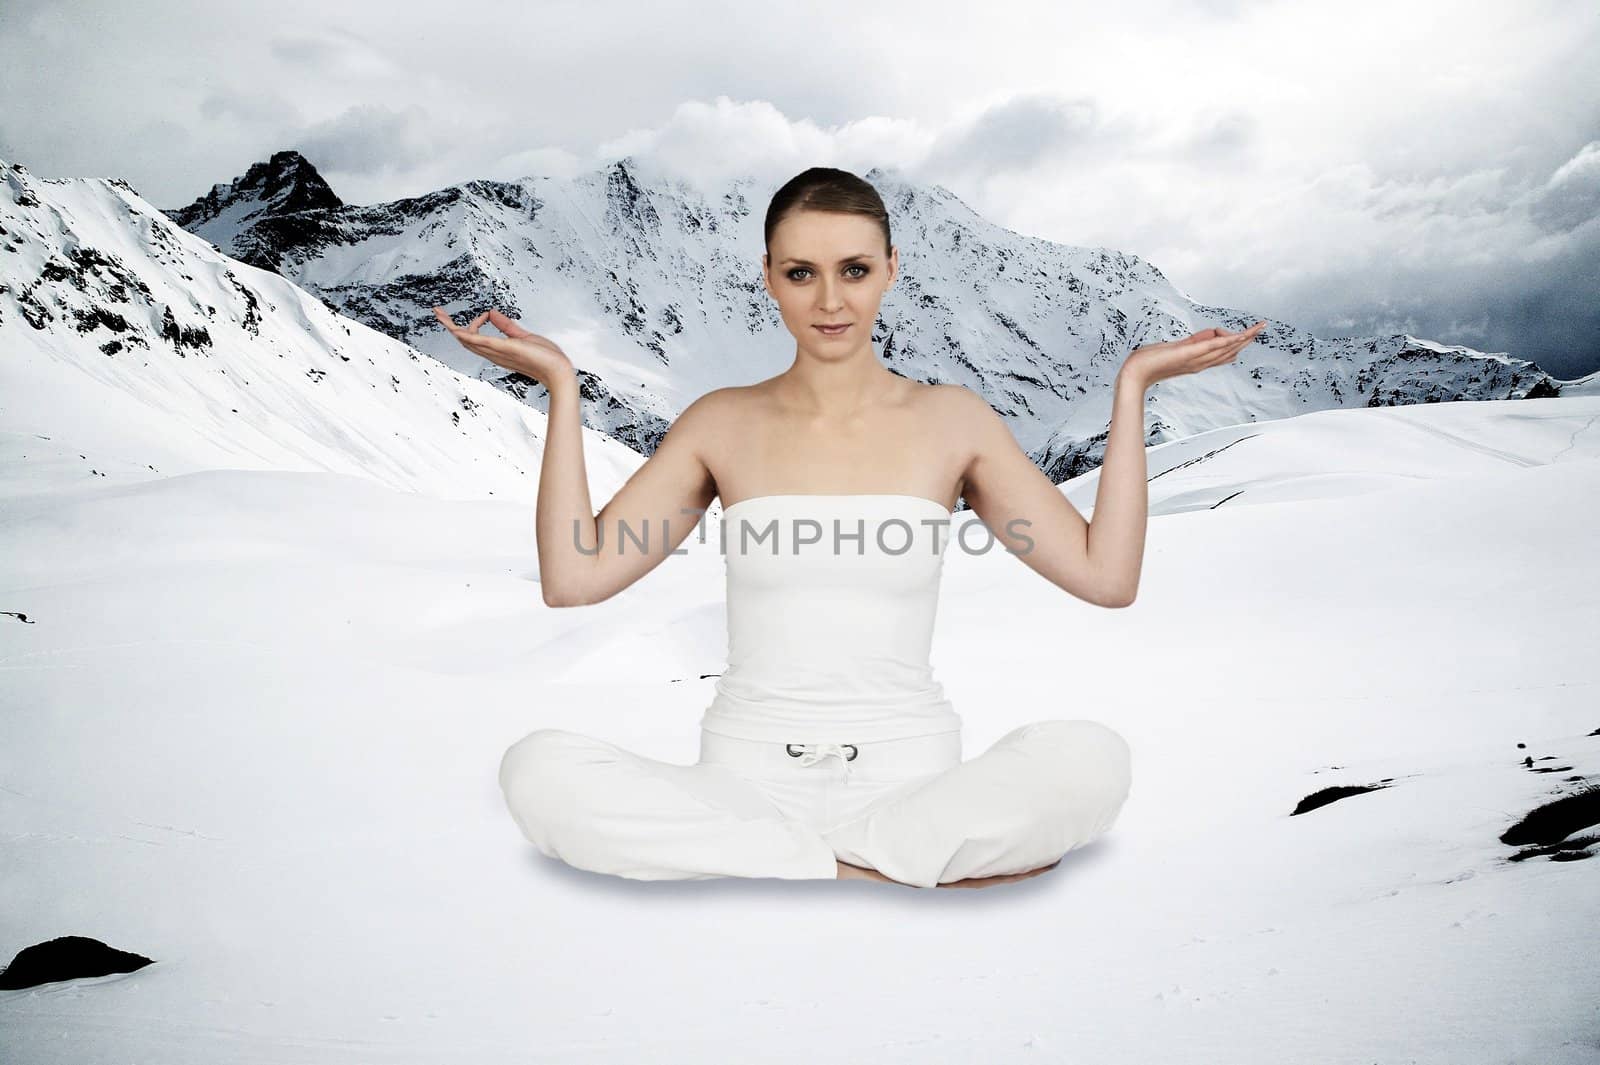 graceful woman sitting cross-legged in mountainous setting by phovoir